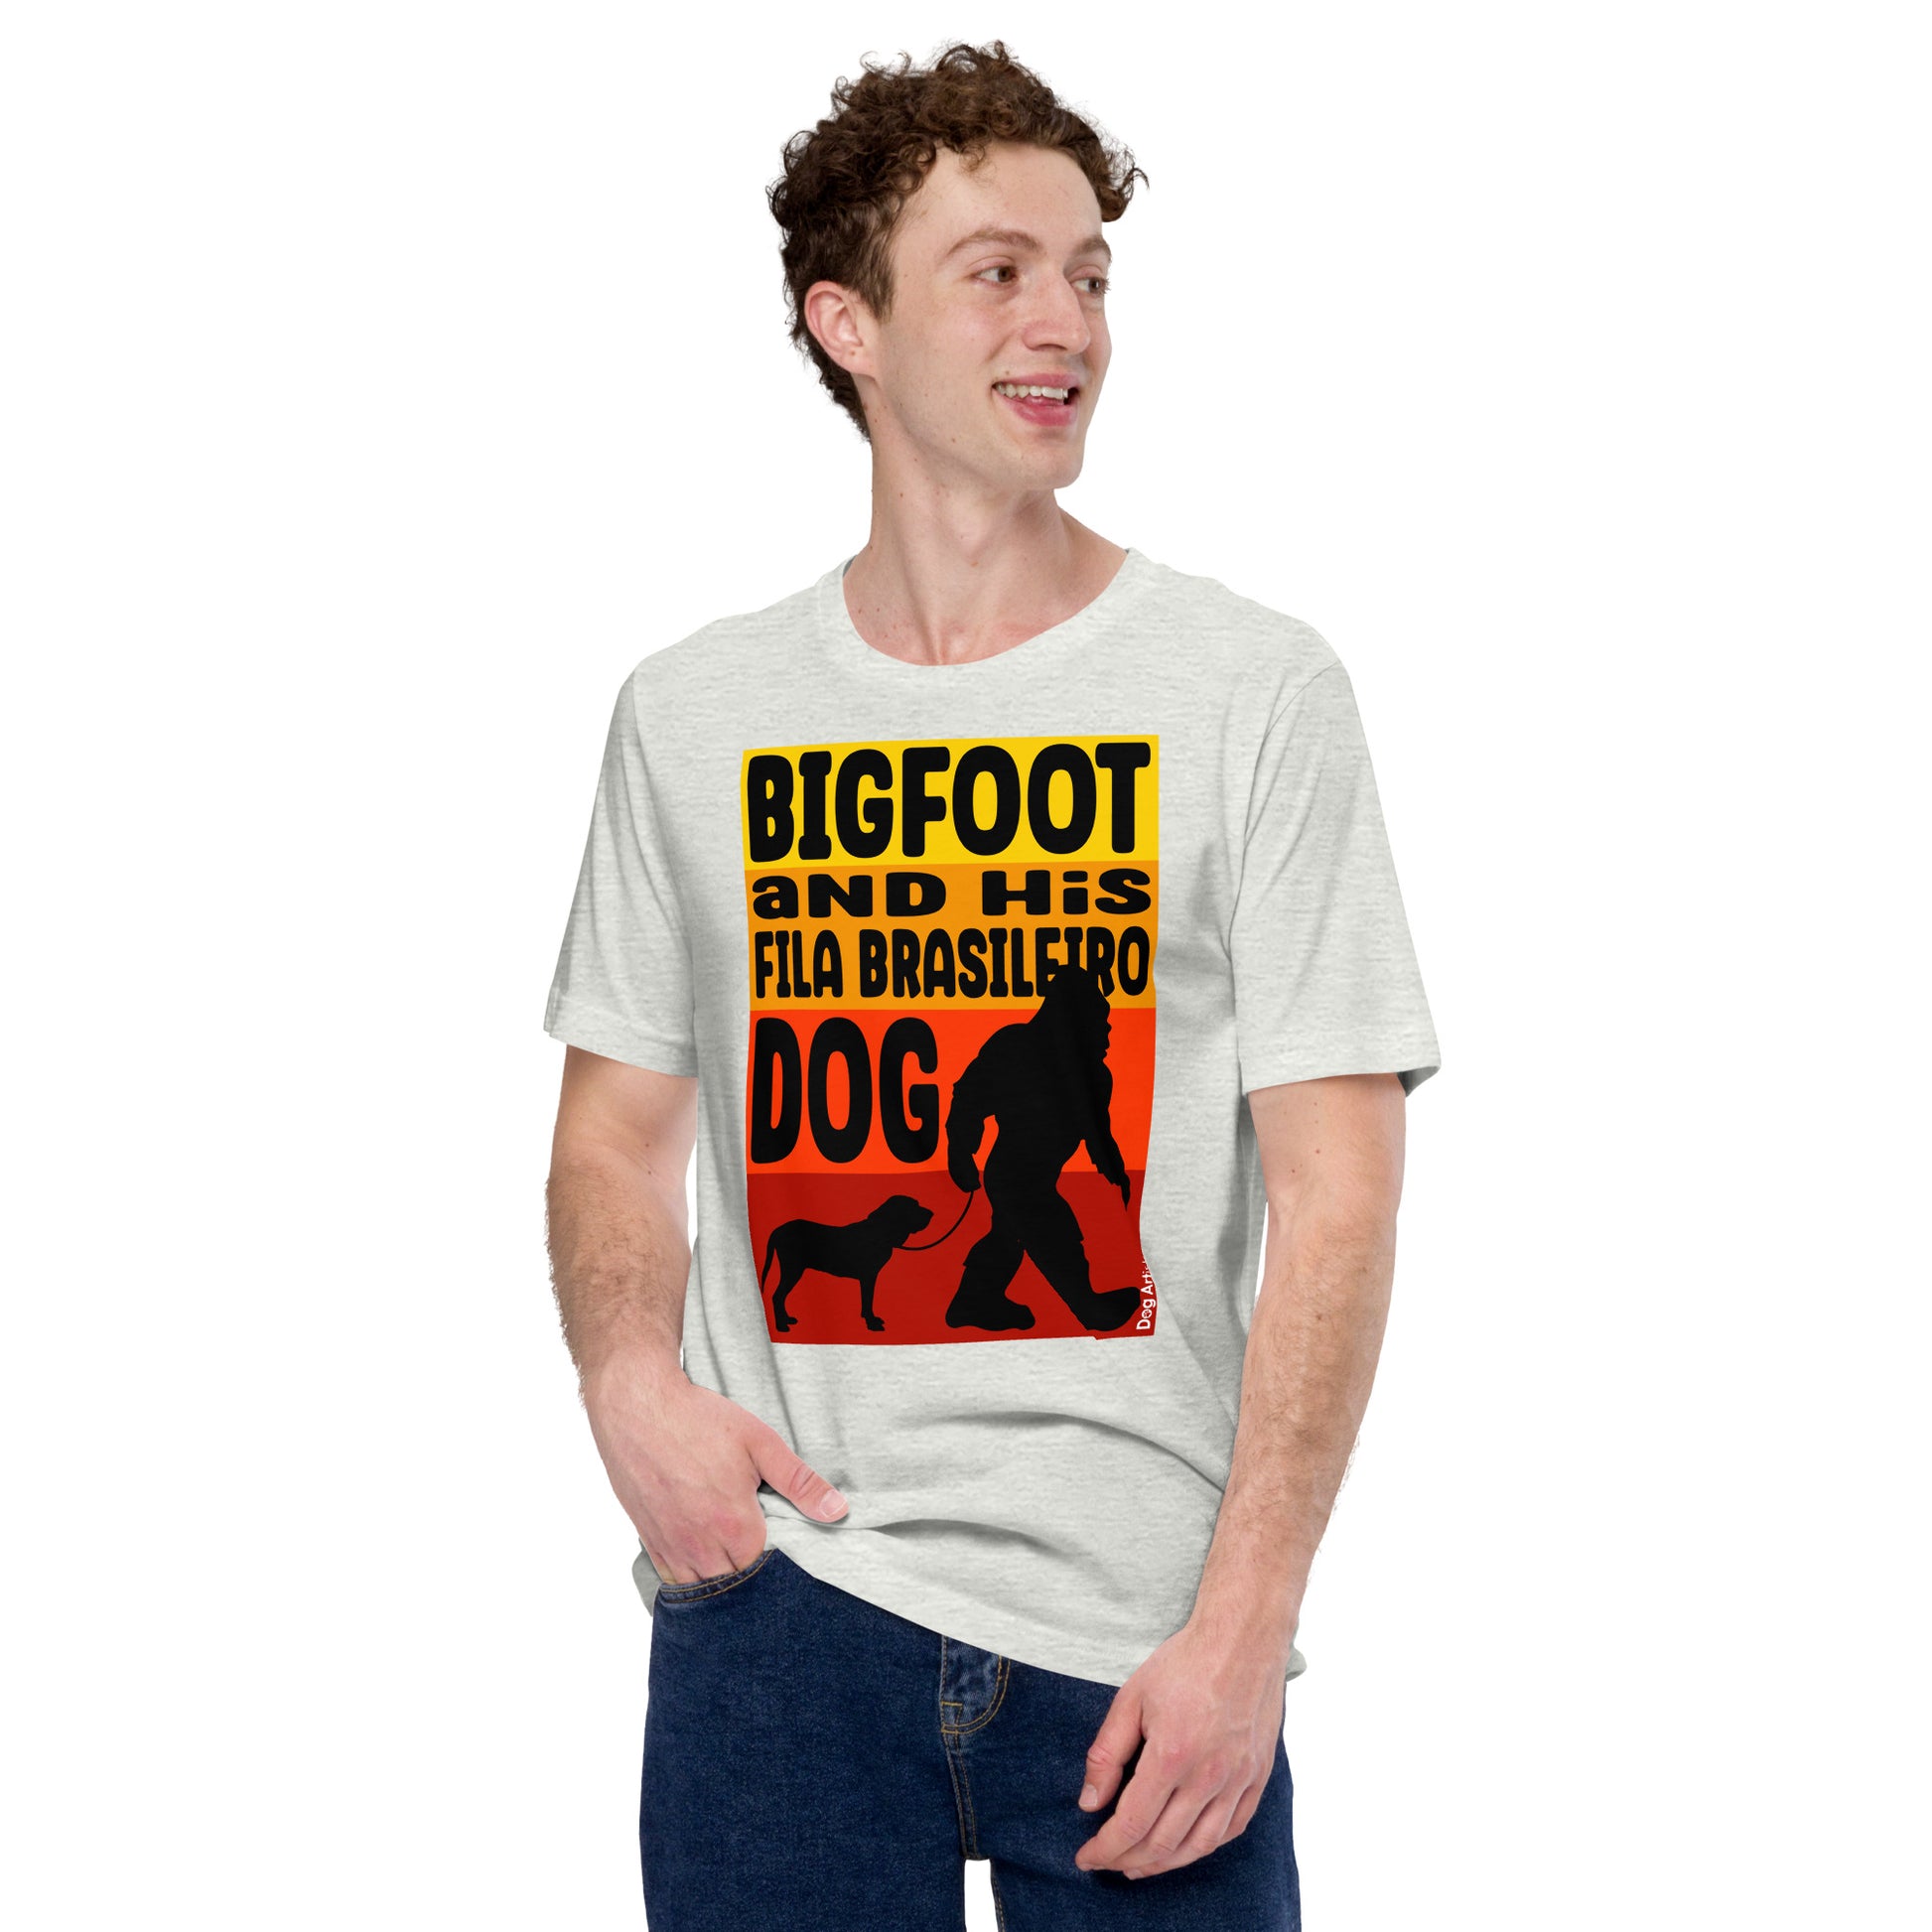 Bigfoot and his Fila Brasileiro unisex ash t-shirt by Dog Artistry.